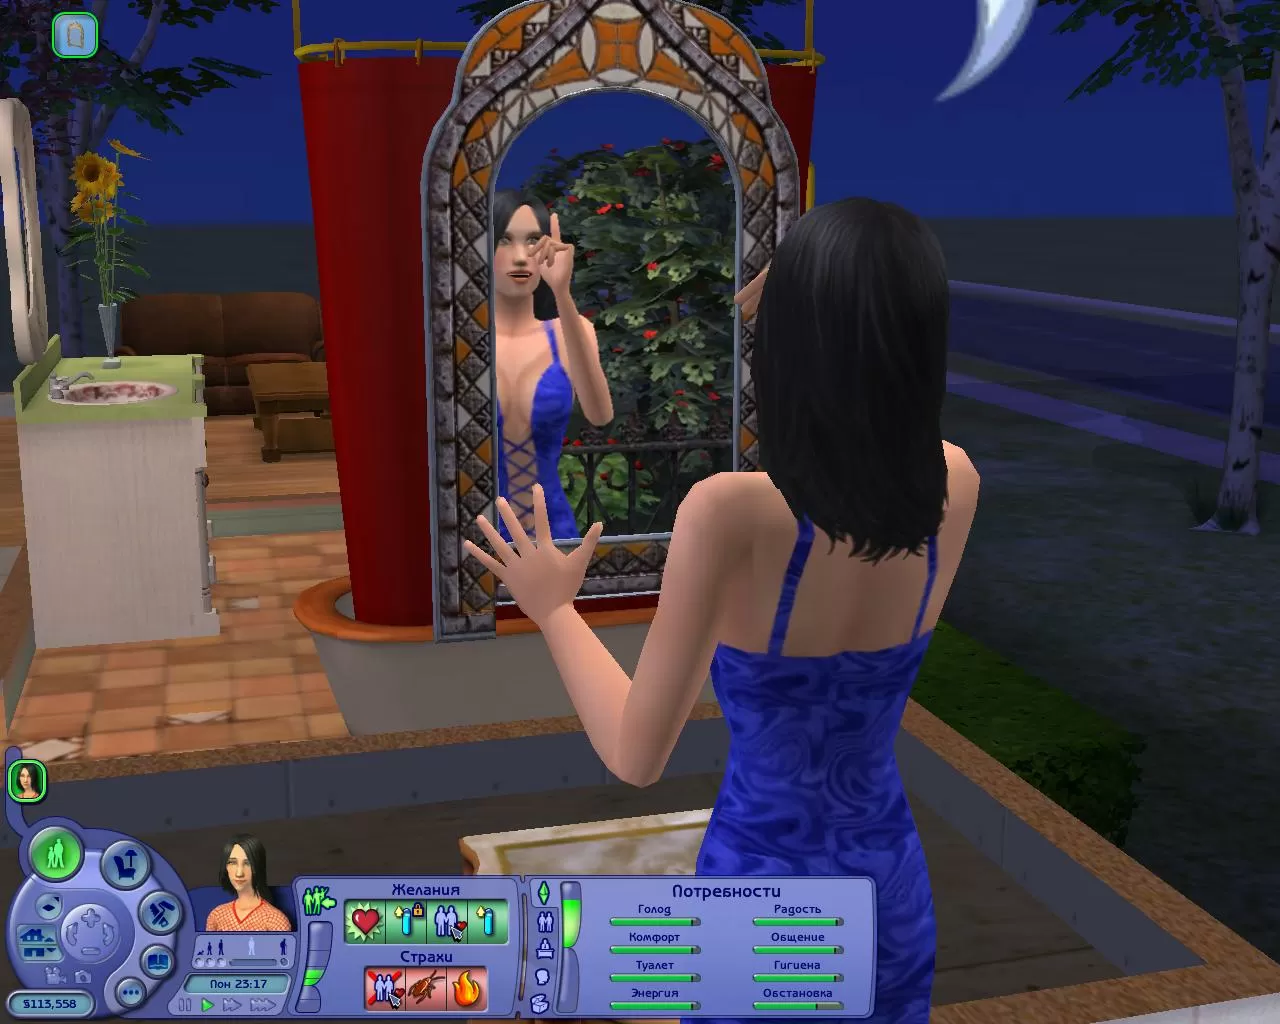 ТОП секс-модов для The Sims 4